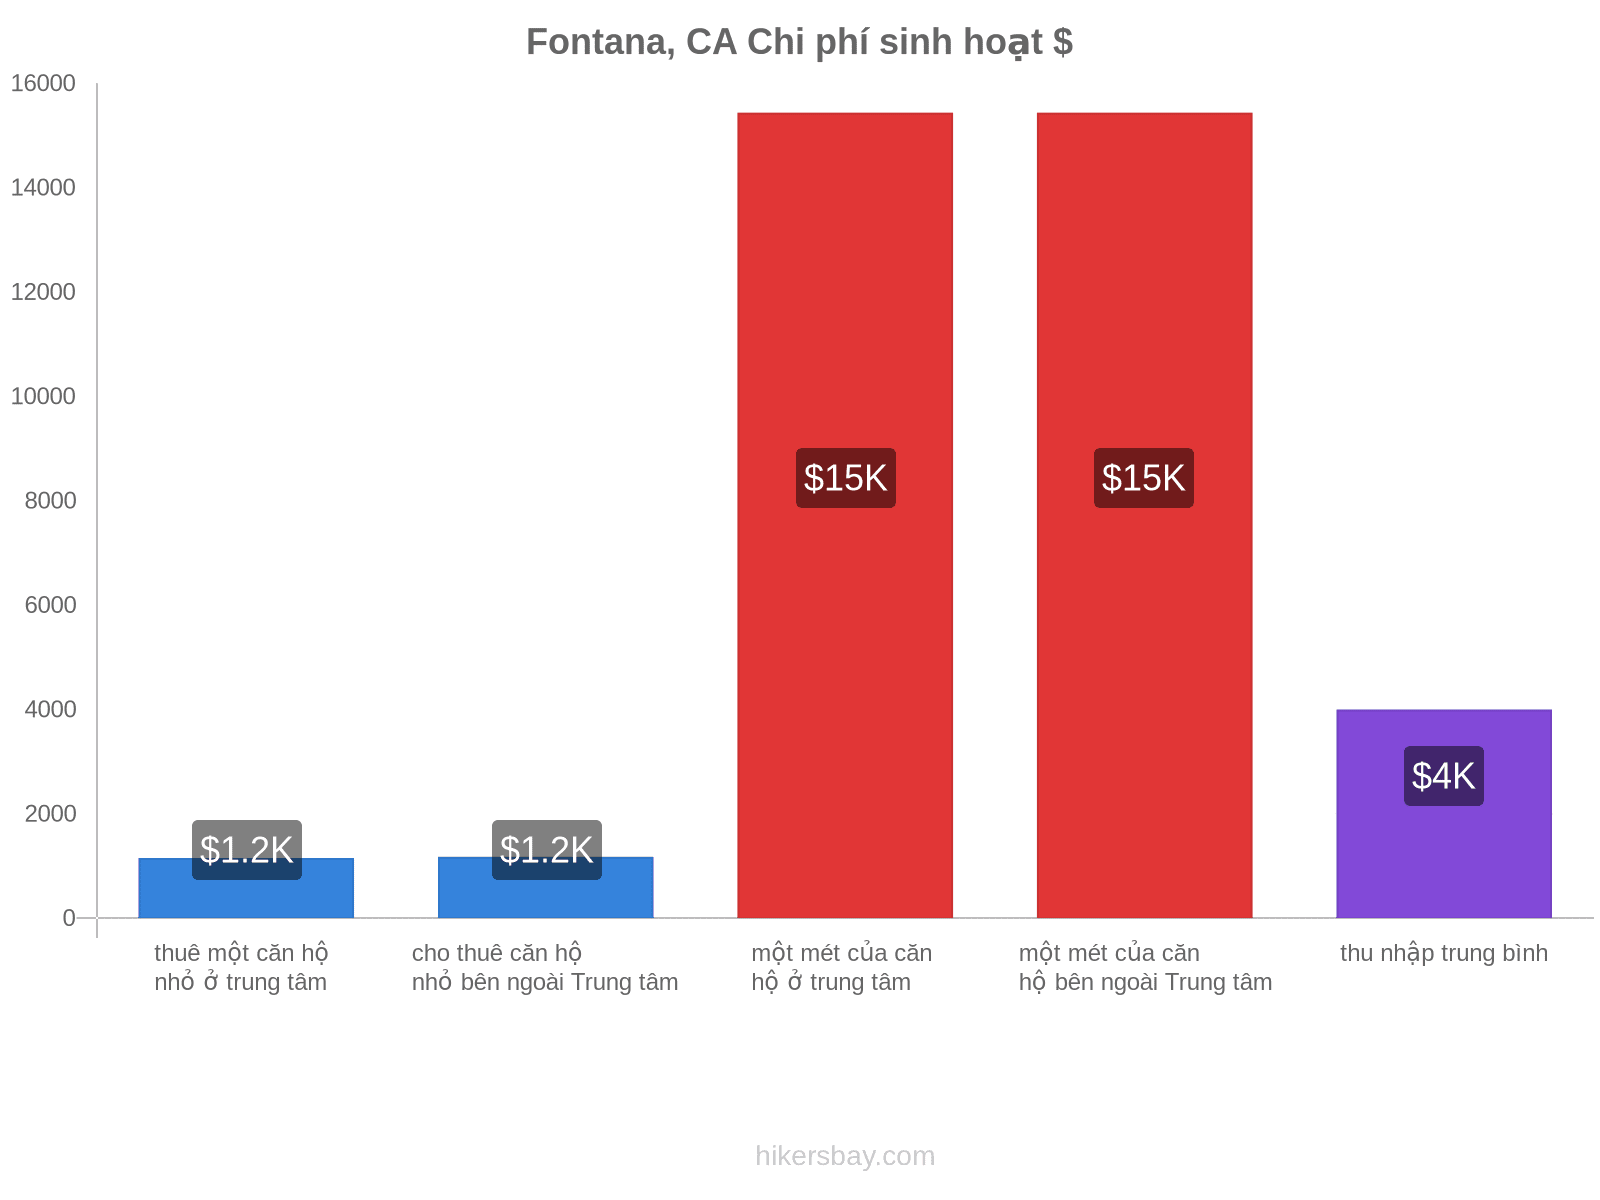 Fontana, CA chi phí sinh hoạt hikersbay.com